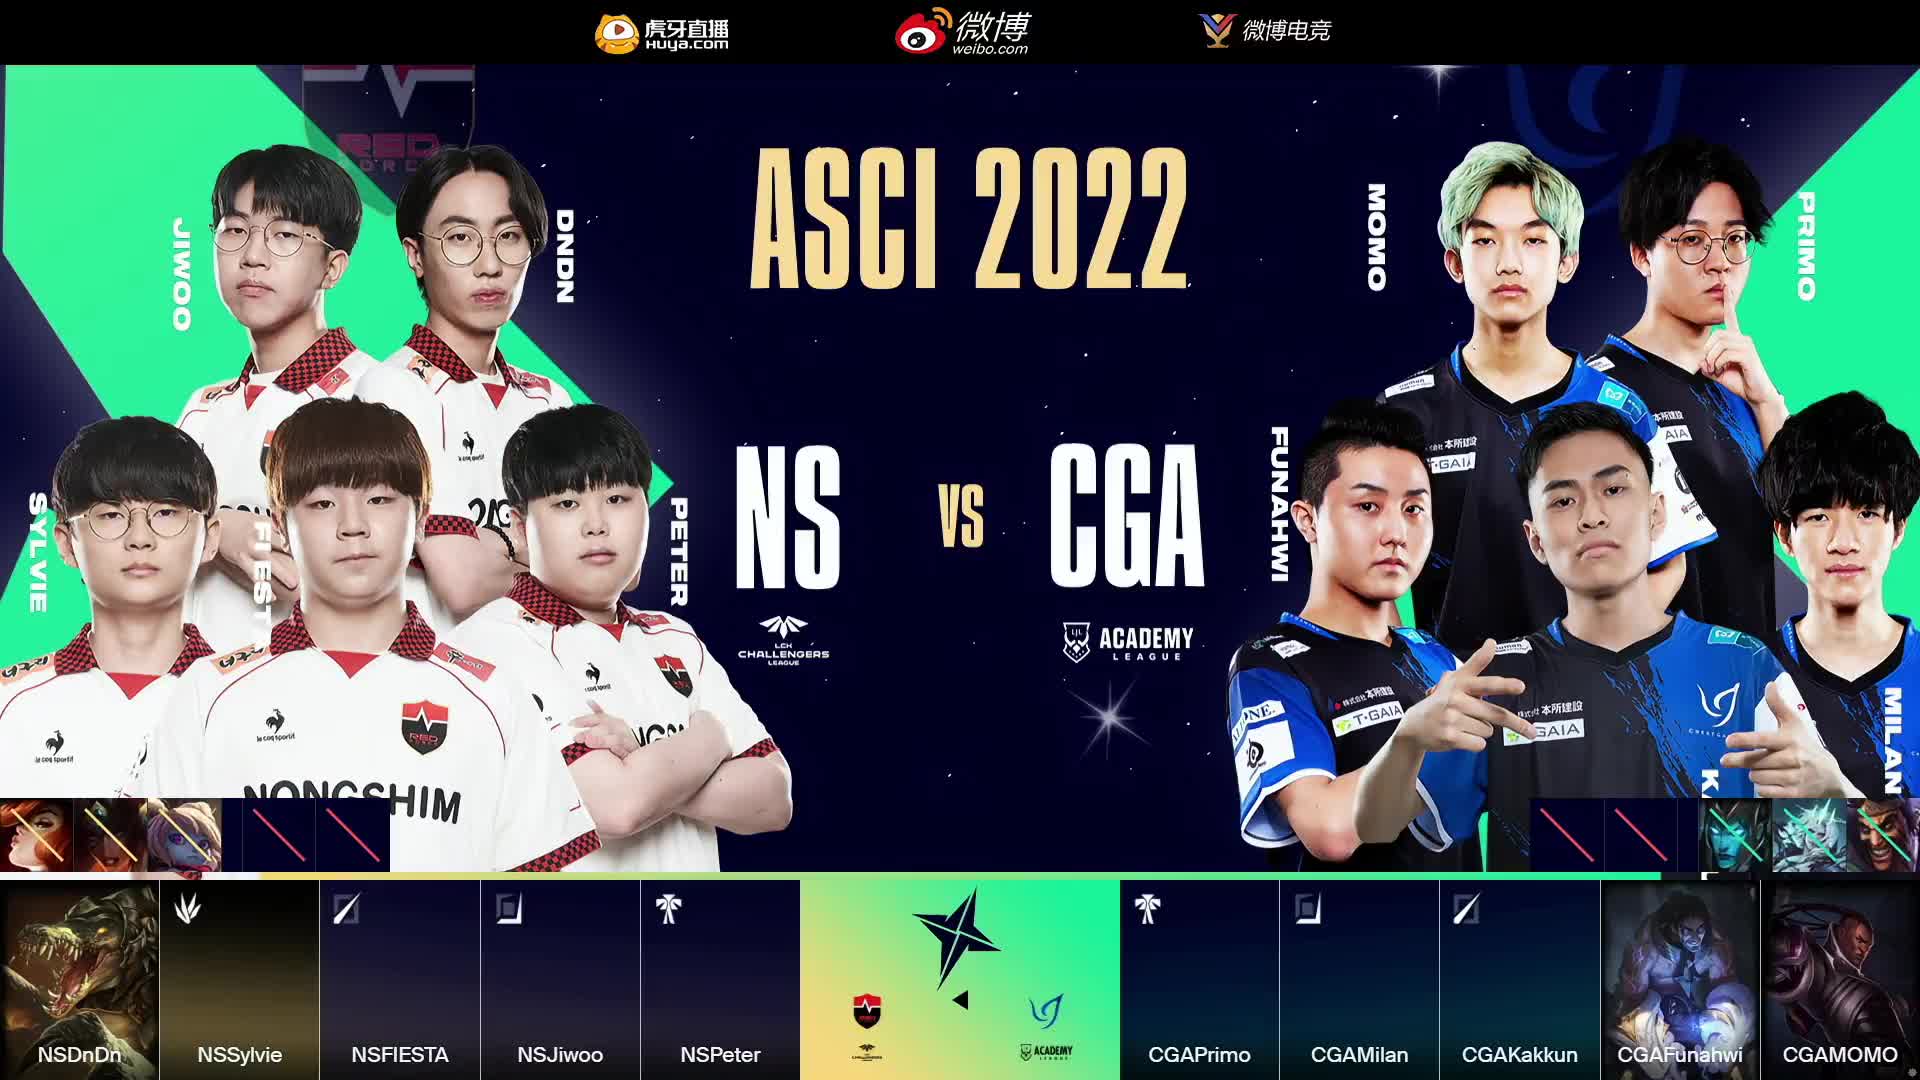 NS vs CGA_BO1-亚洲挑战者之星邀请赛